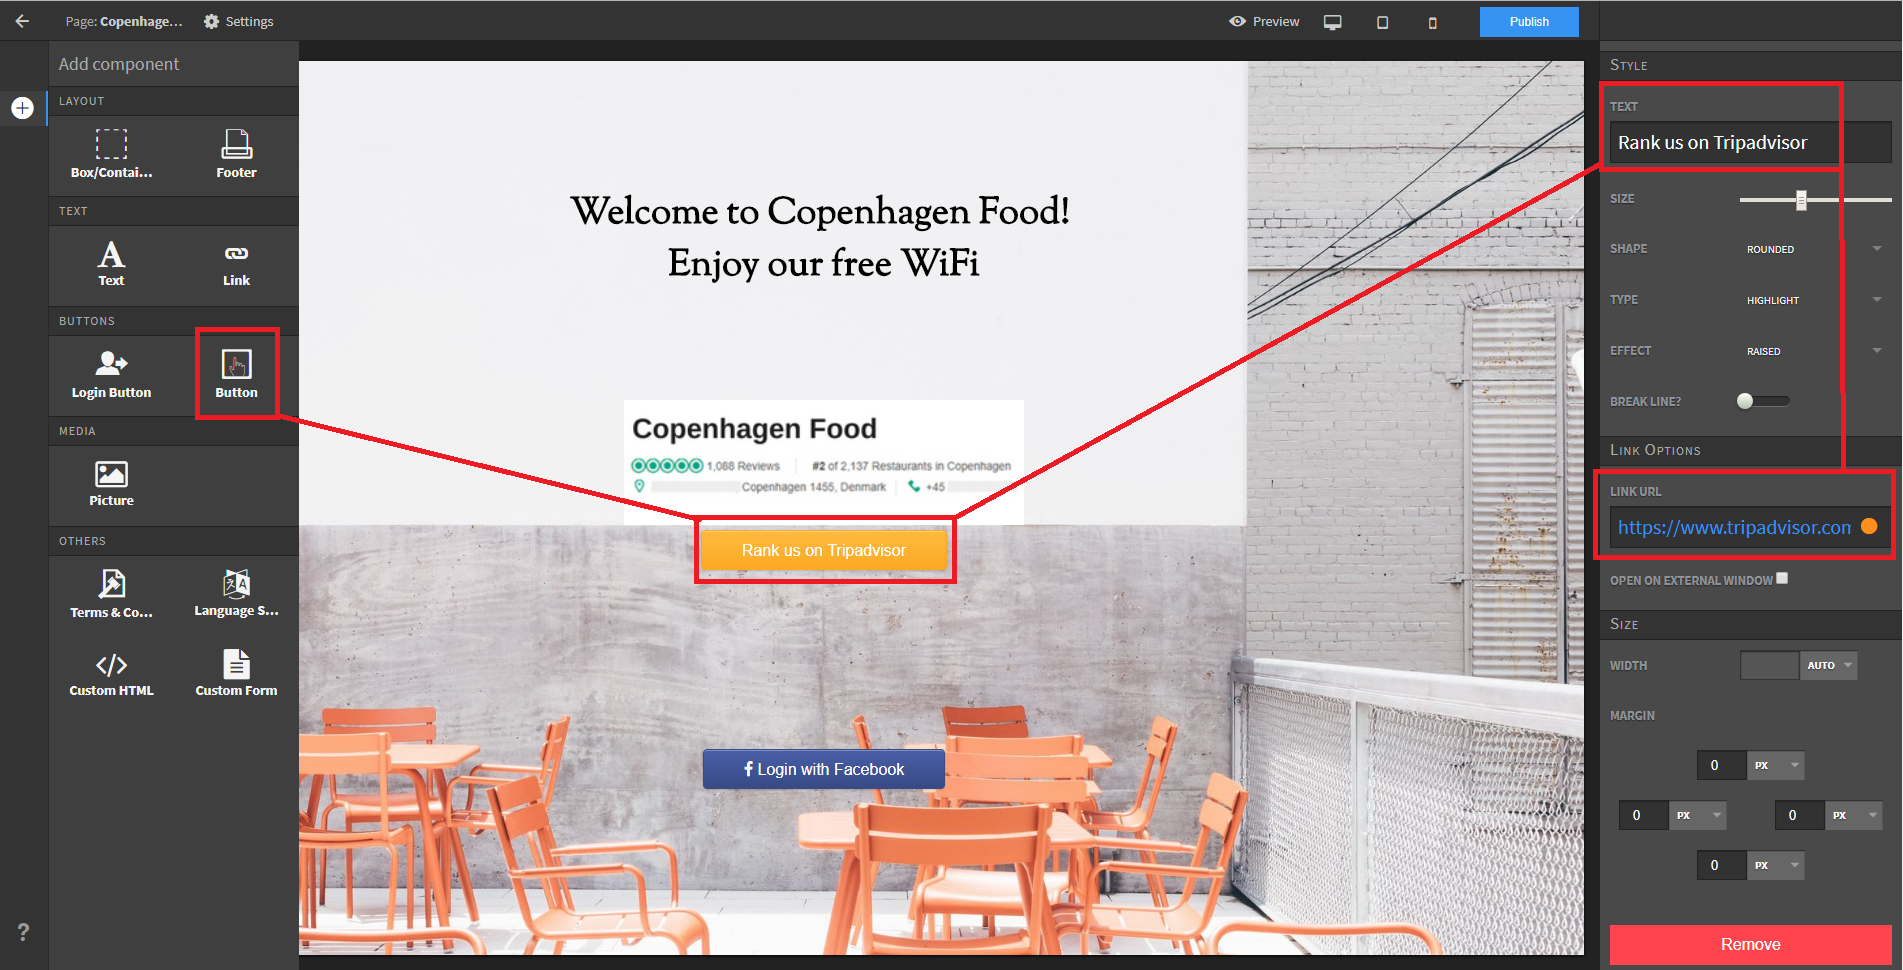 Copenhagen Food Tripadvisor Reviews Splash Page